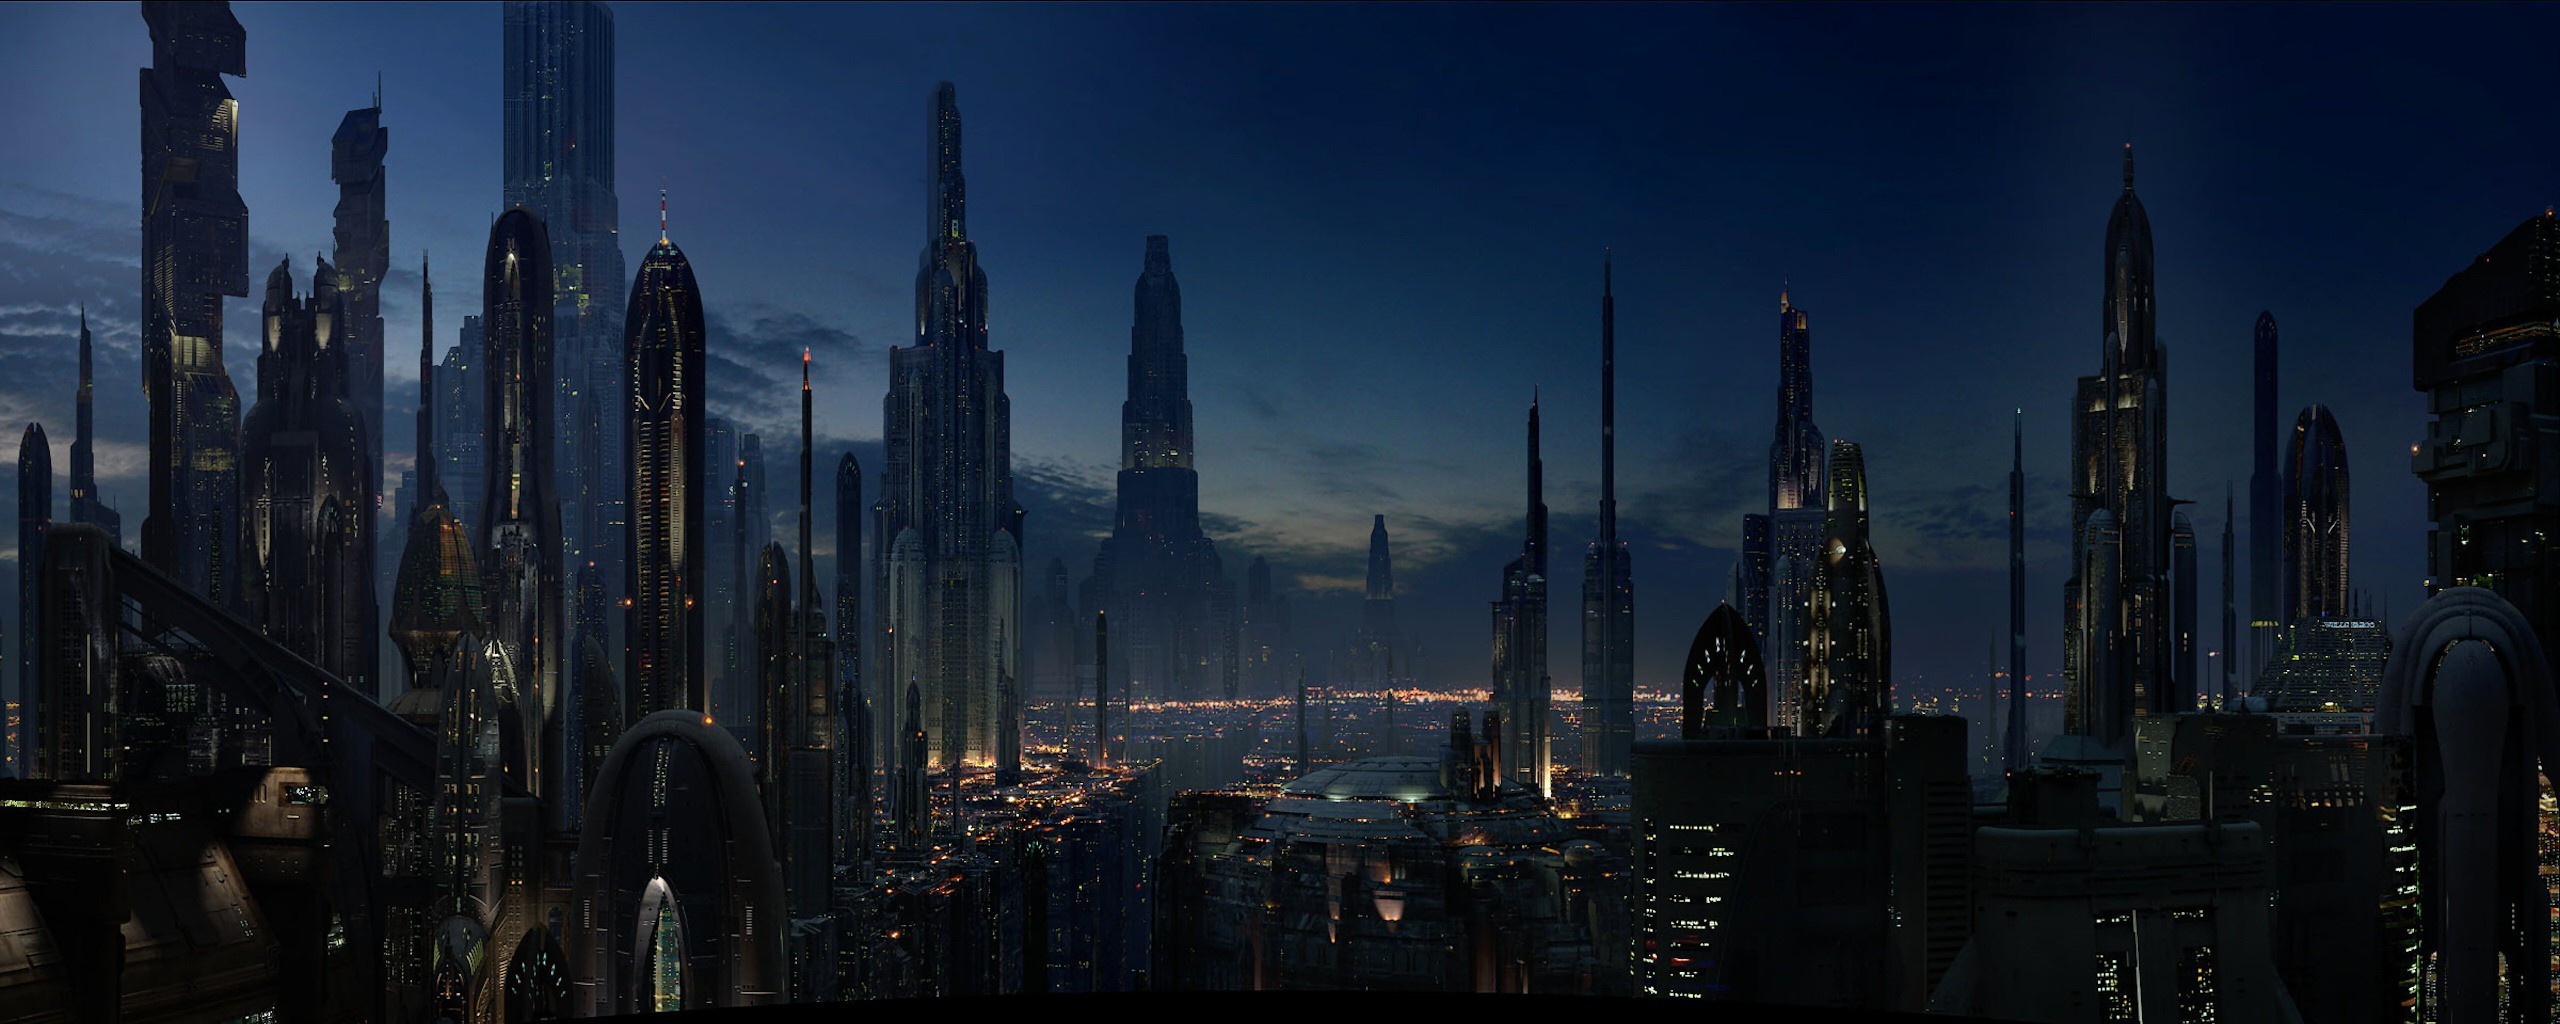 Cityscape City Night Lights Sky Science Fiction Futuristic Star Wars Coruscant 2560x1024